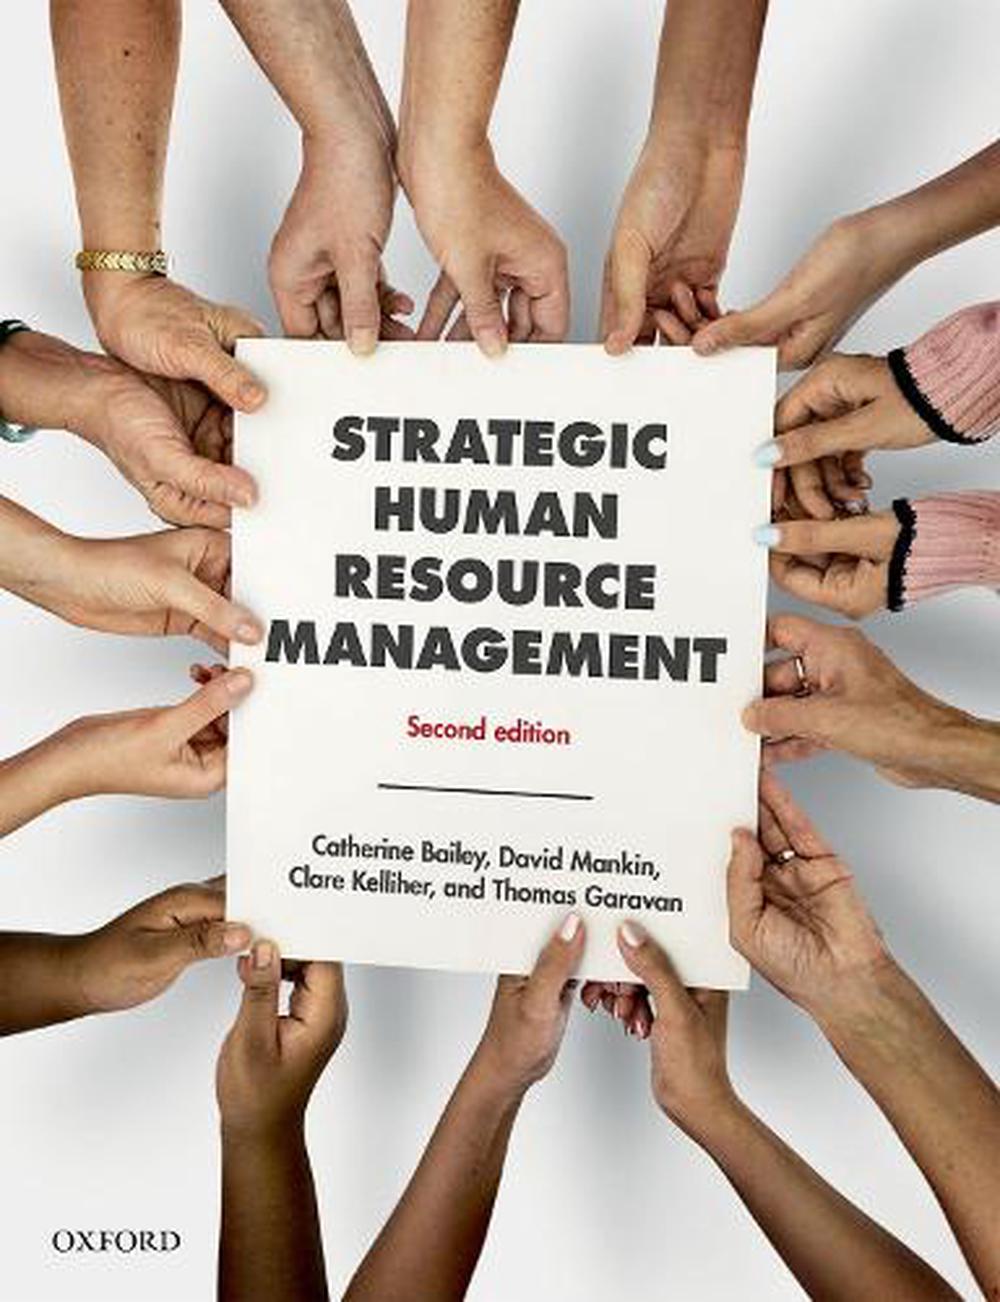 strategic human resource management assignment